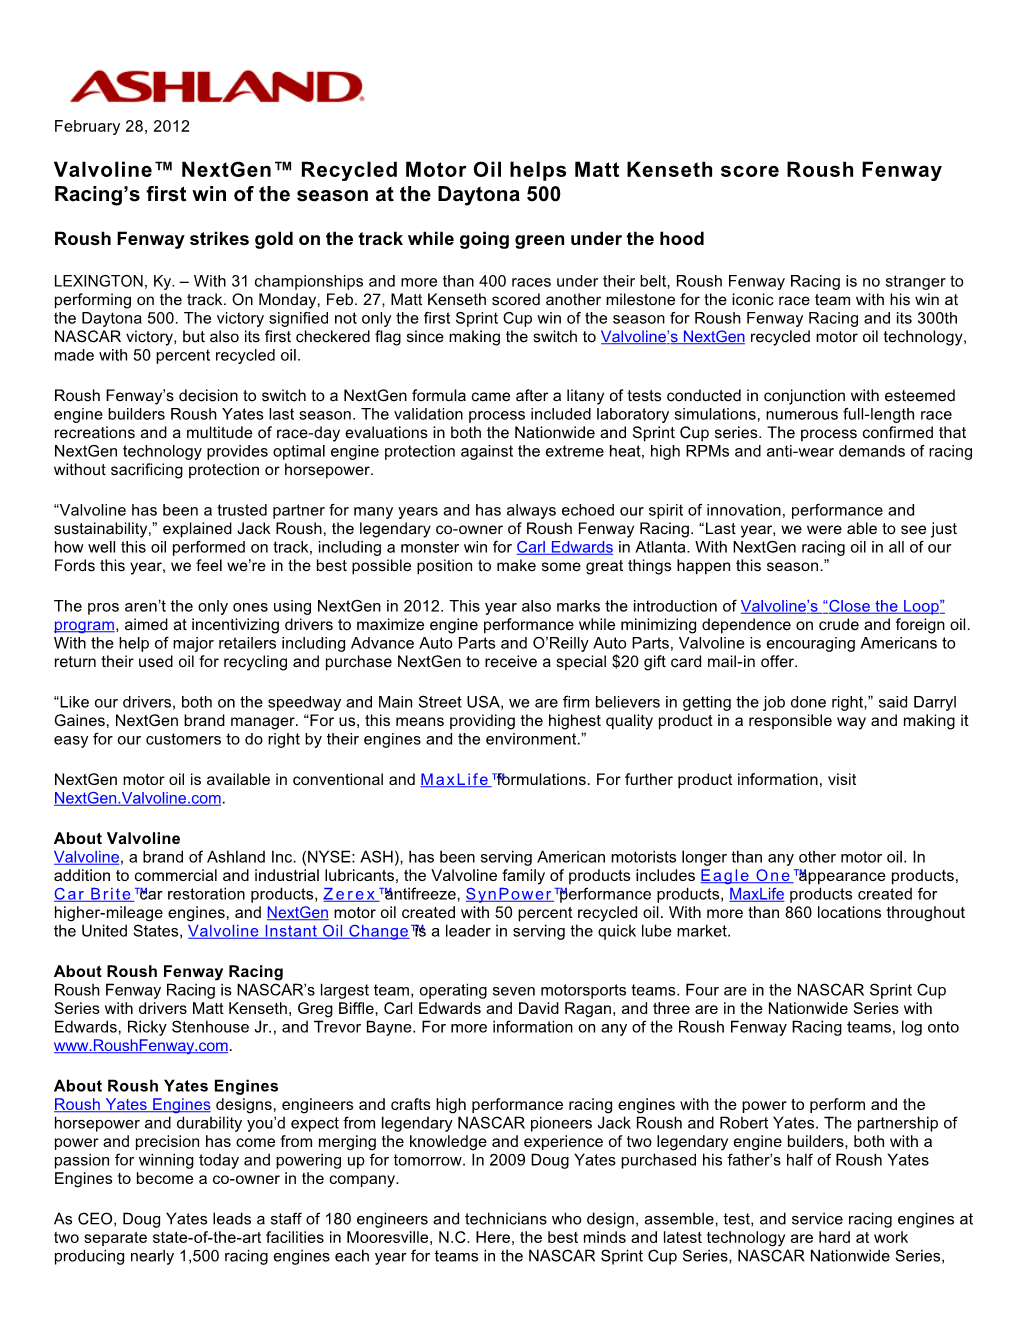 Valvoline™ Nextgen™ Recycled Motor Oil Helps Matt Kenseth Score Roush Fenway Racing’S First Win of the Season at the Daytona 500